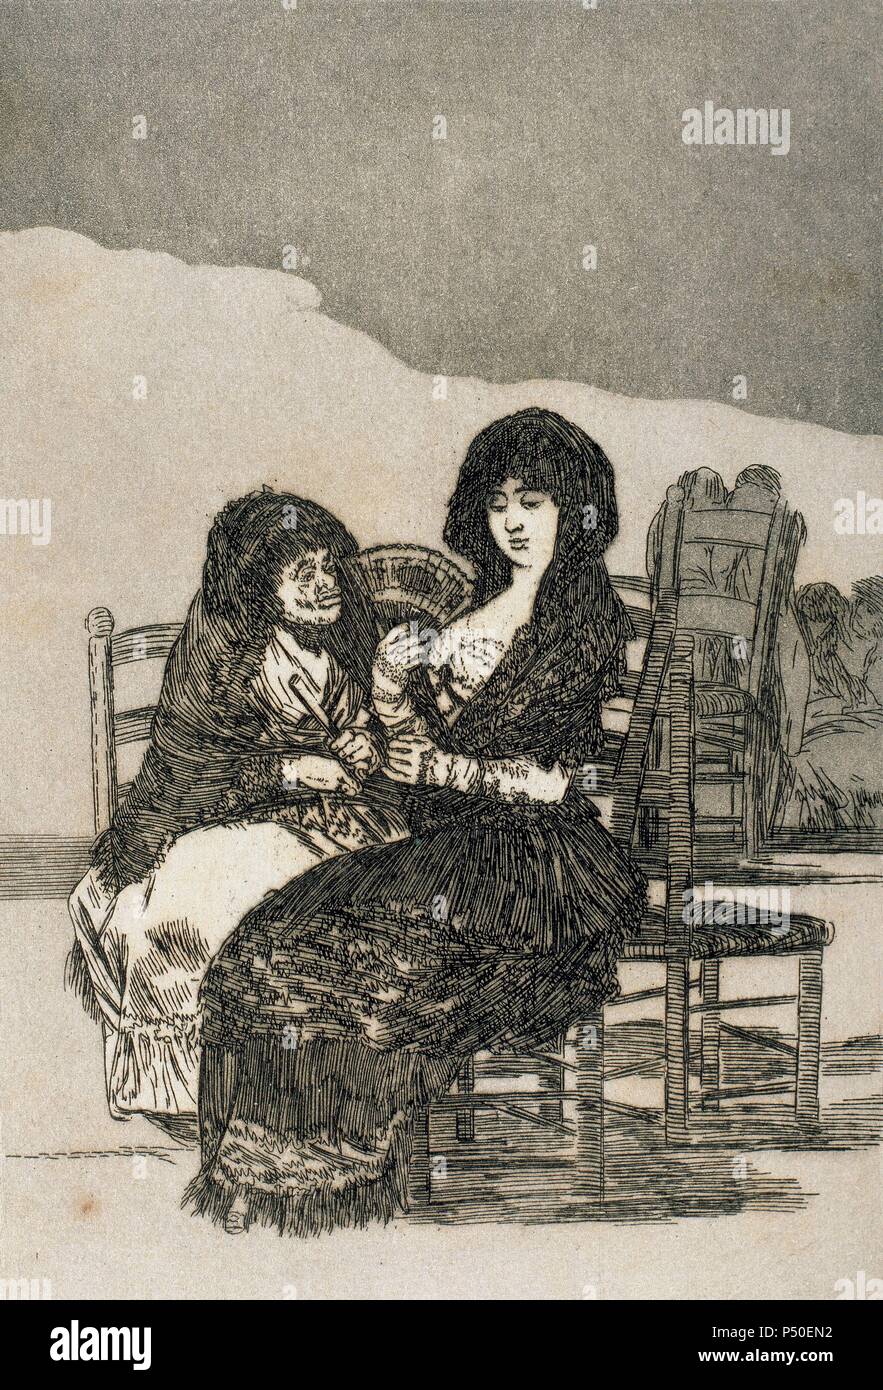 Francisco de Goya (1746-1828). Spanischer Maler und Graphiker. Los Caprichos. "Bellos Consejos" (Guter Rat). Platte 15. Aquatinta. 1799. Reproduktion von M.SEGUI ich Riera. Stockfoto